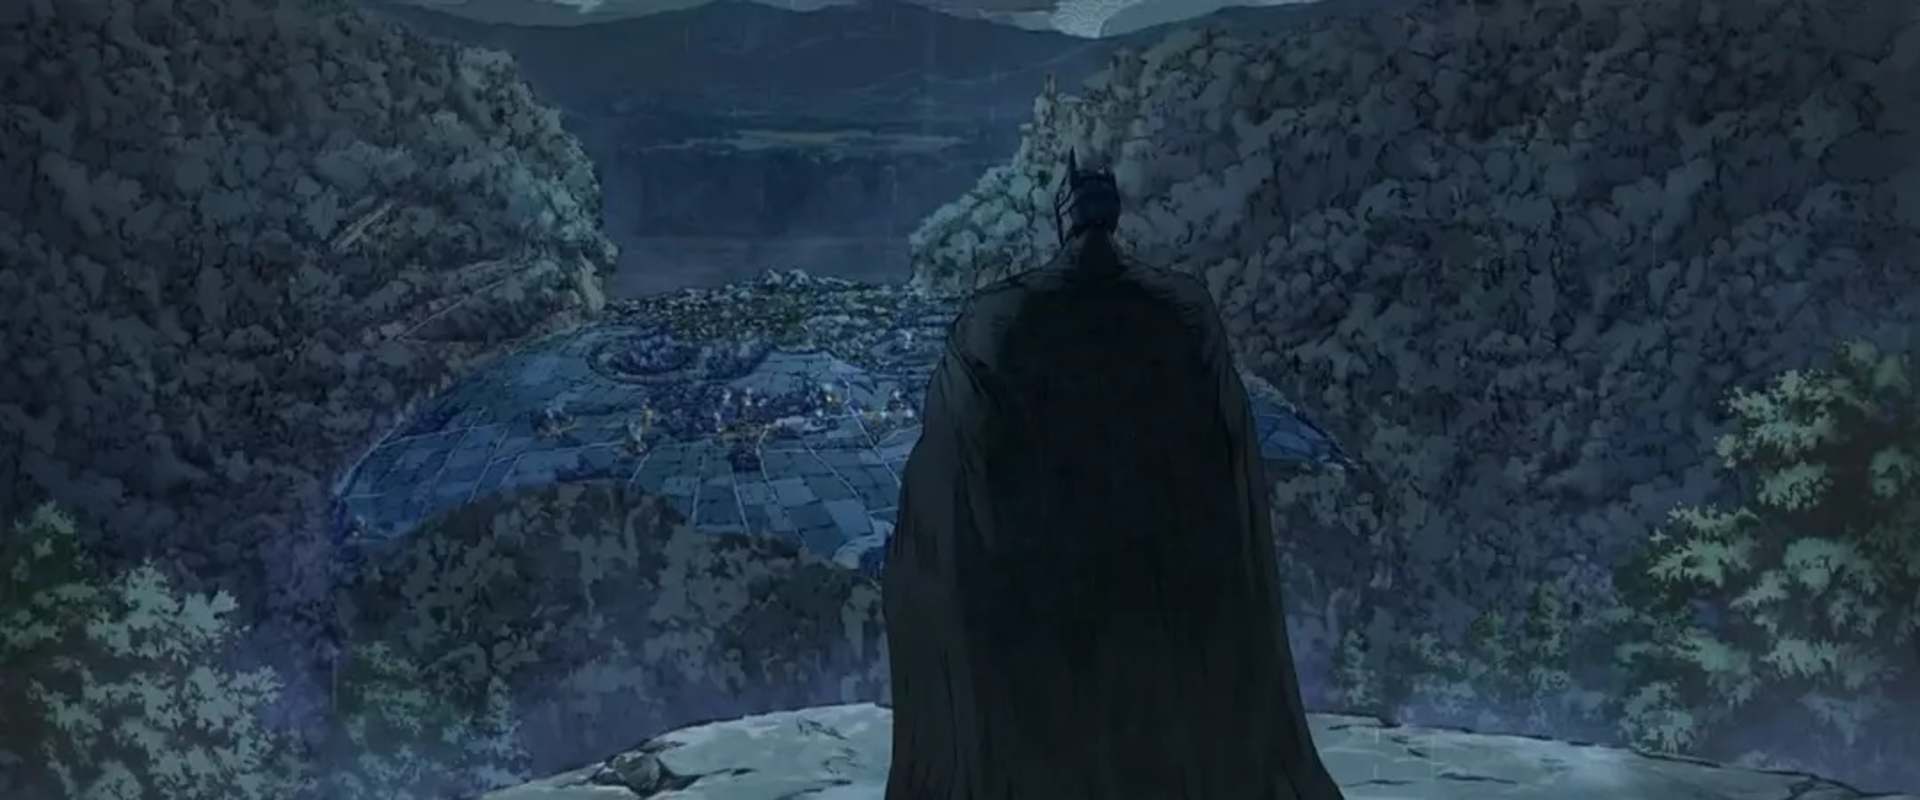 Batman Ninja background 2